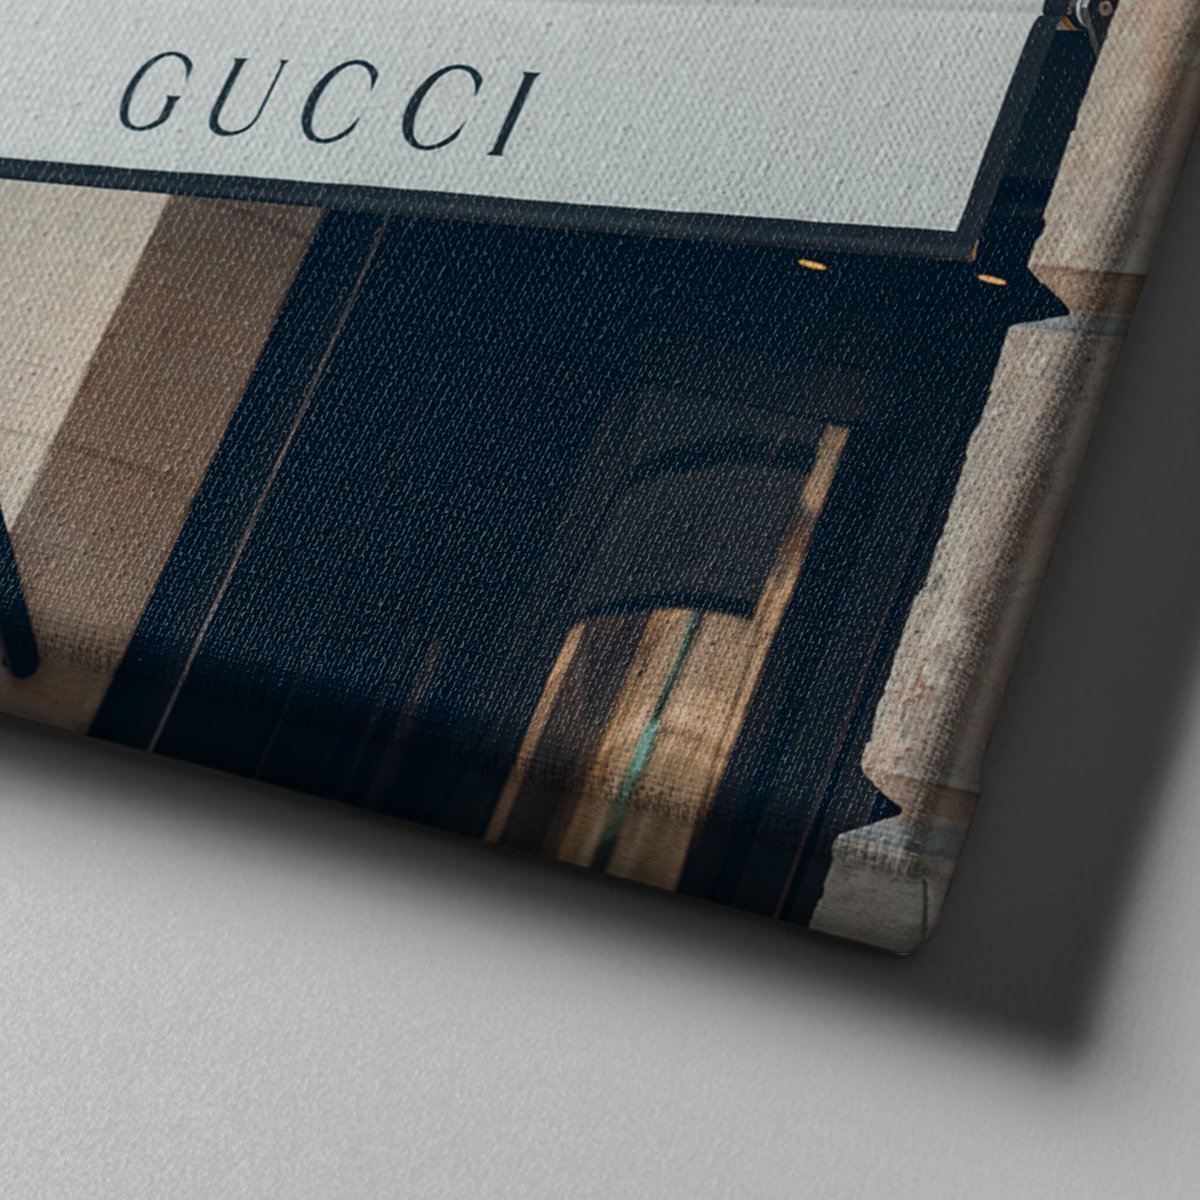 Market701 | Gucci Mağaza Önü Kanvas Tablo - 